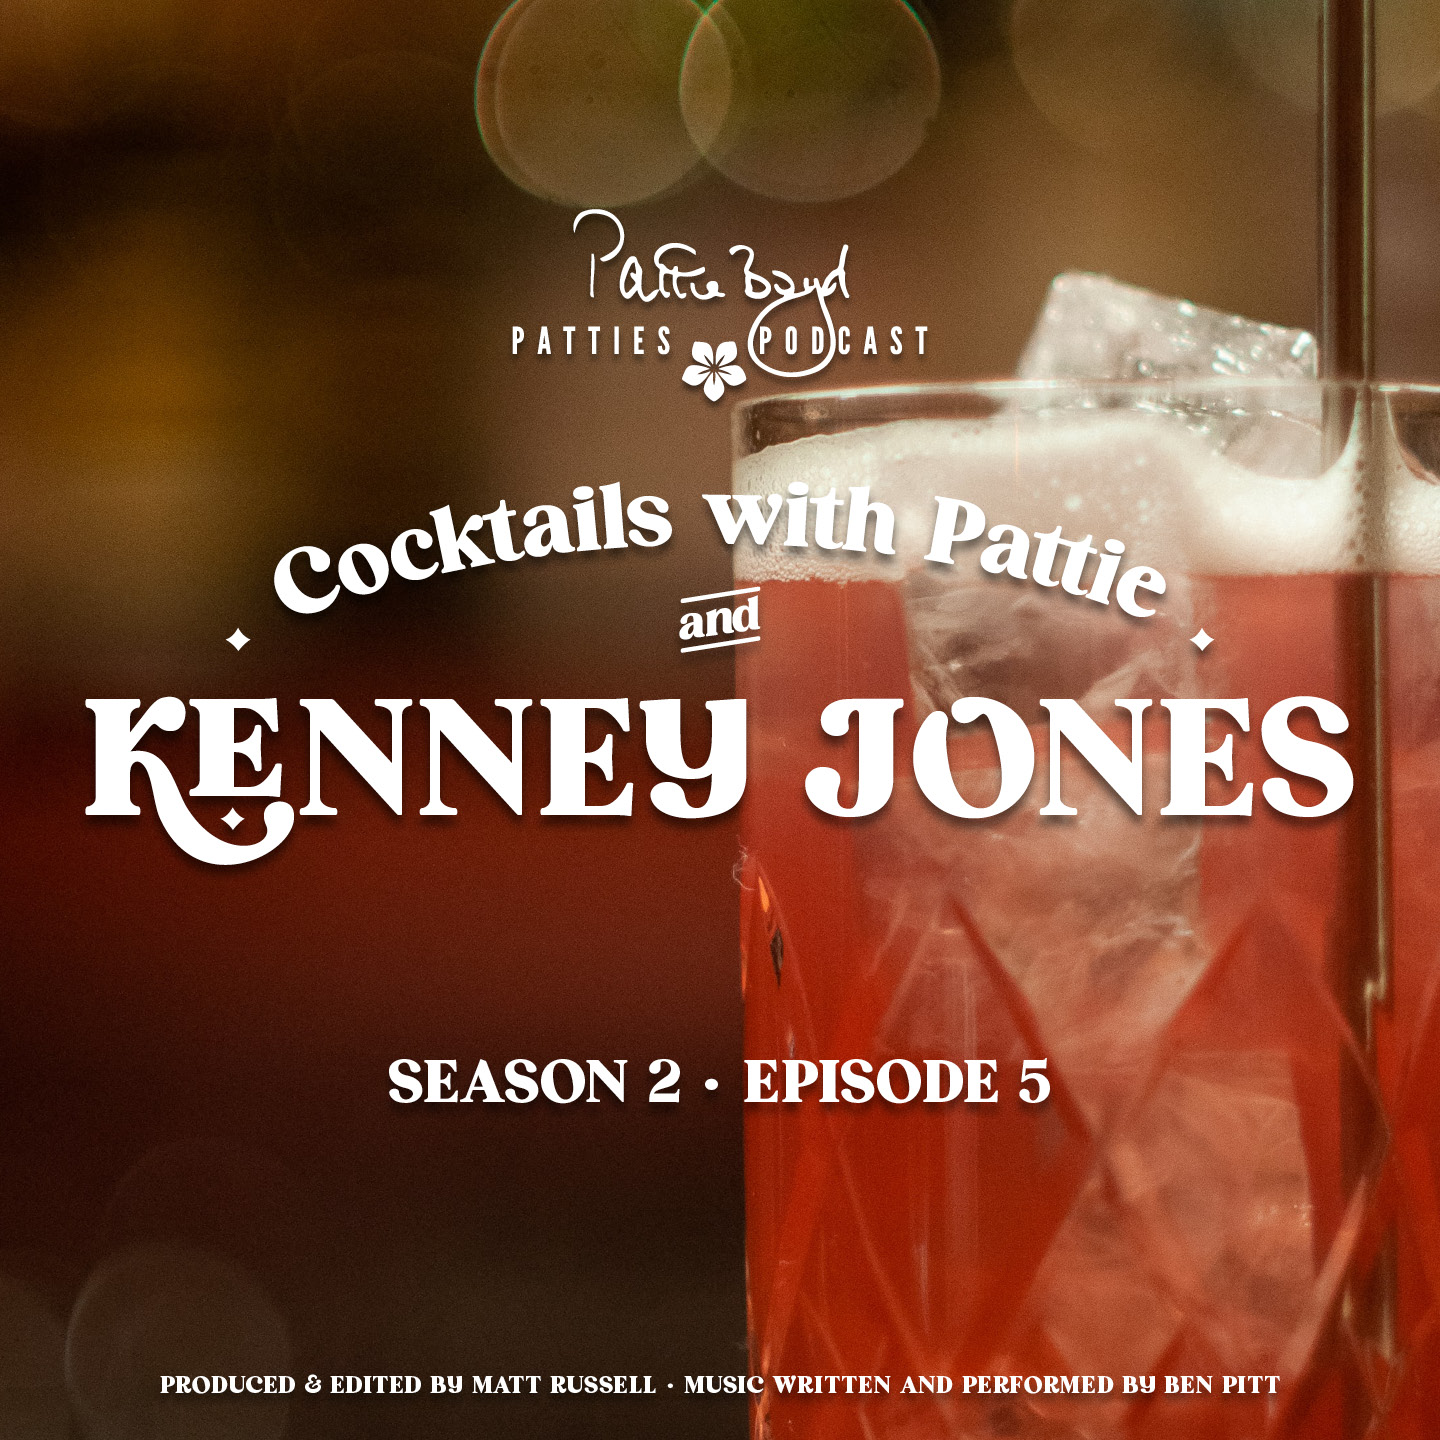 Kenney Jones